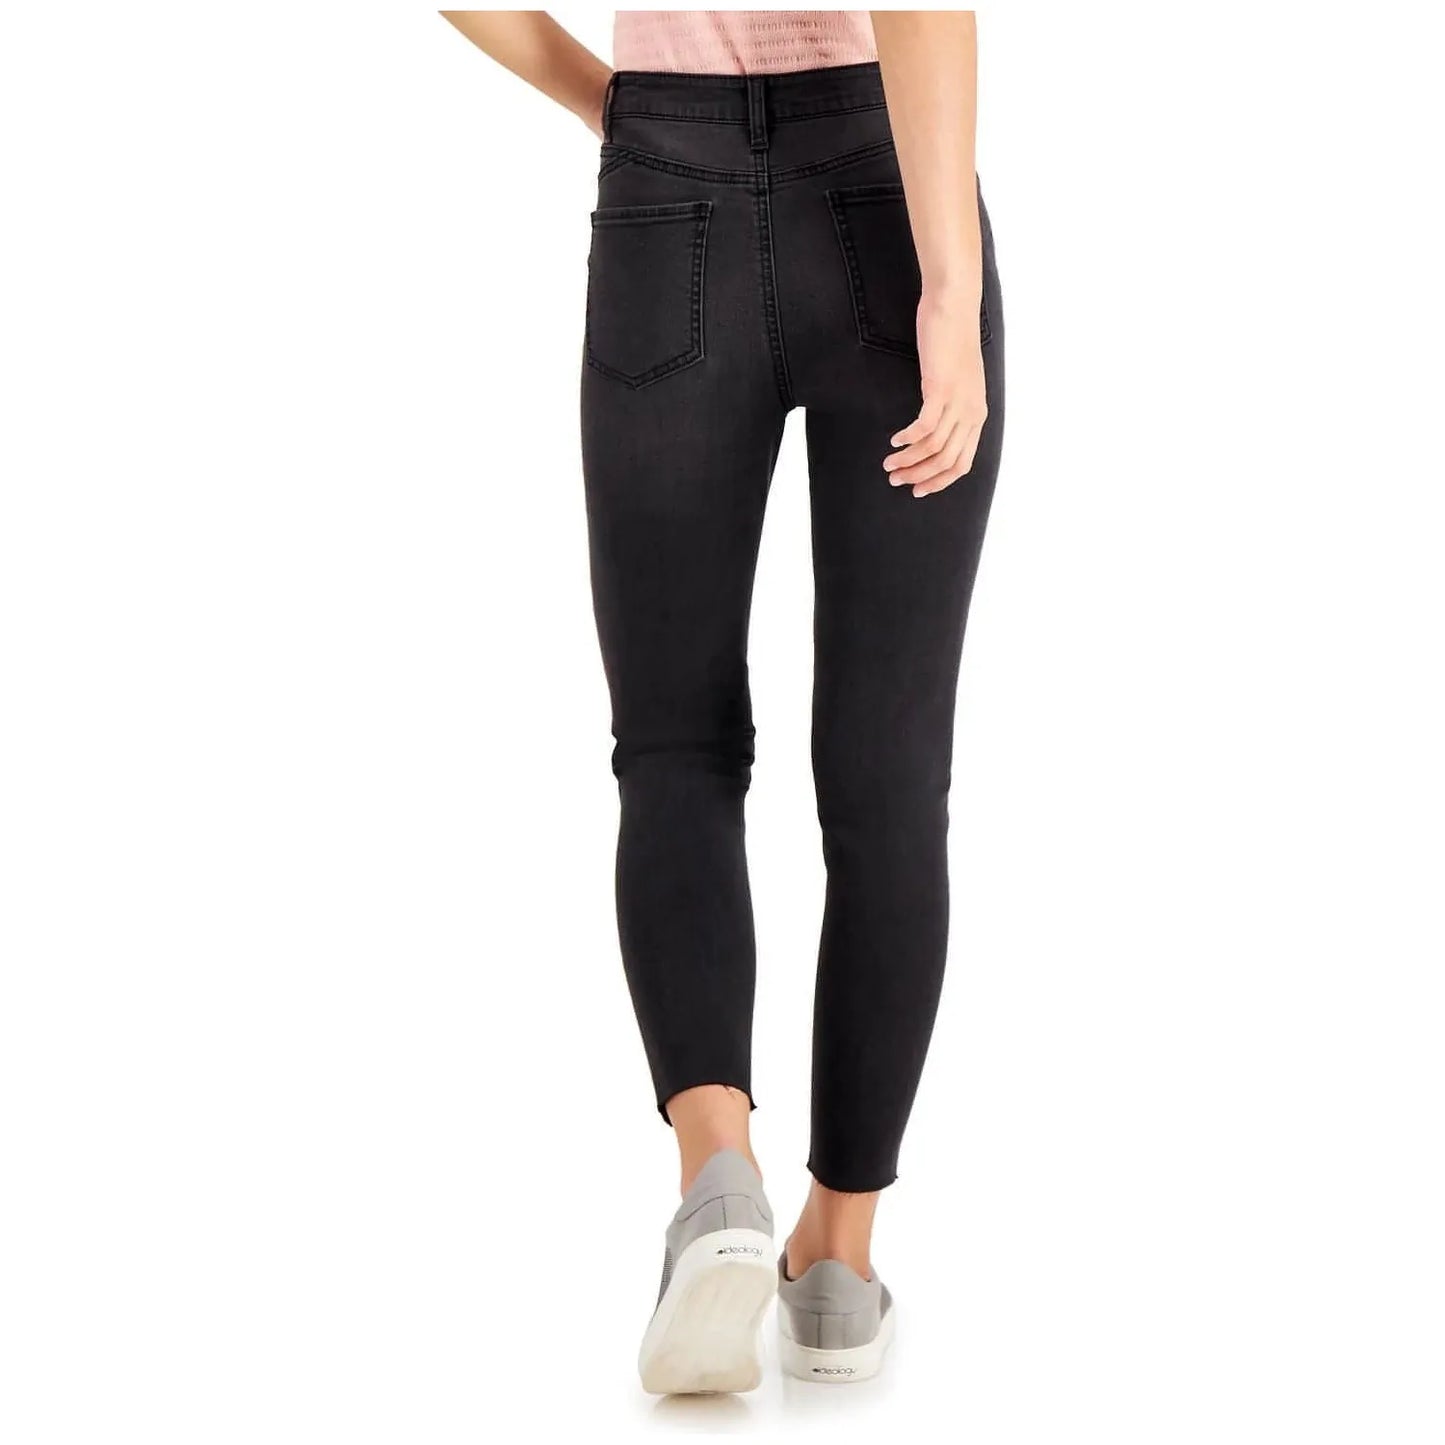 Tinseltown High Rise Skinny Jeans, Black - Brandat Outlet